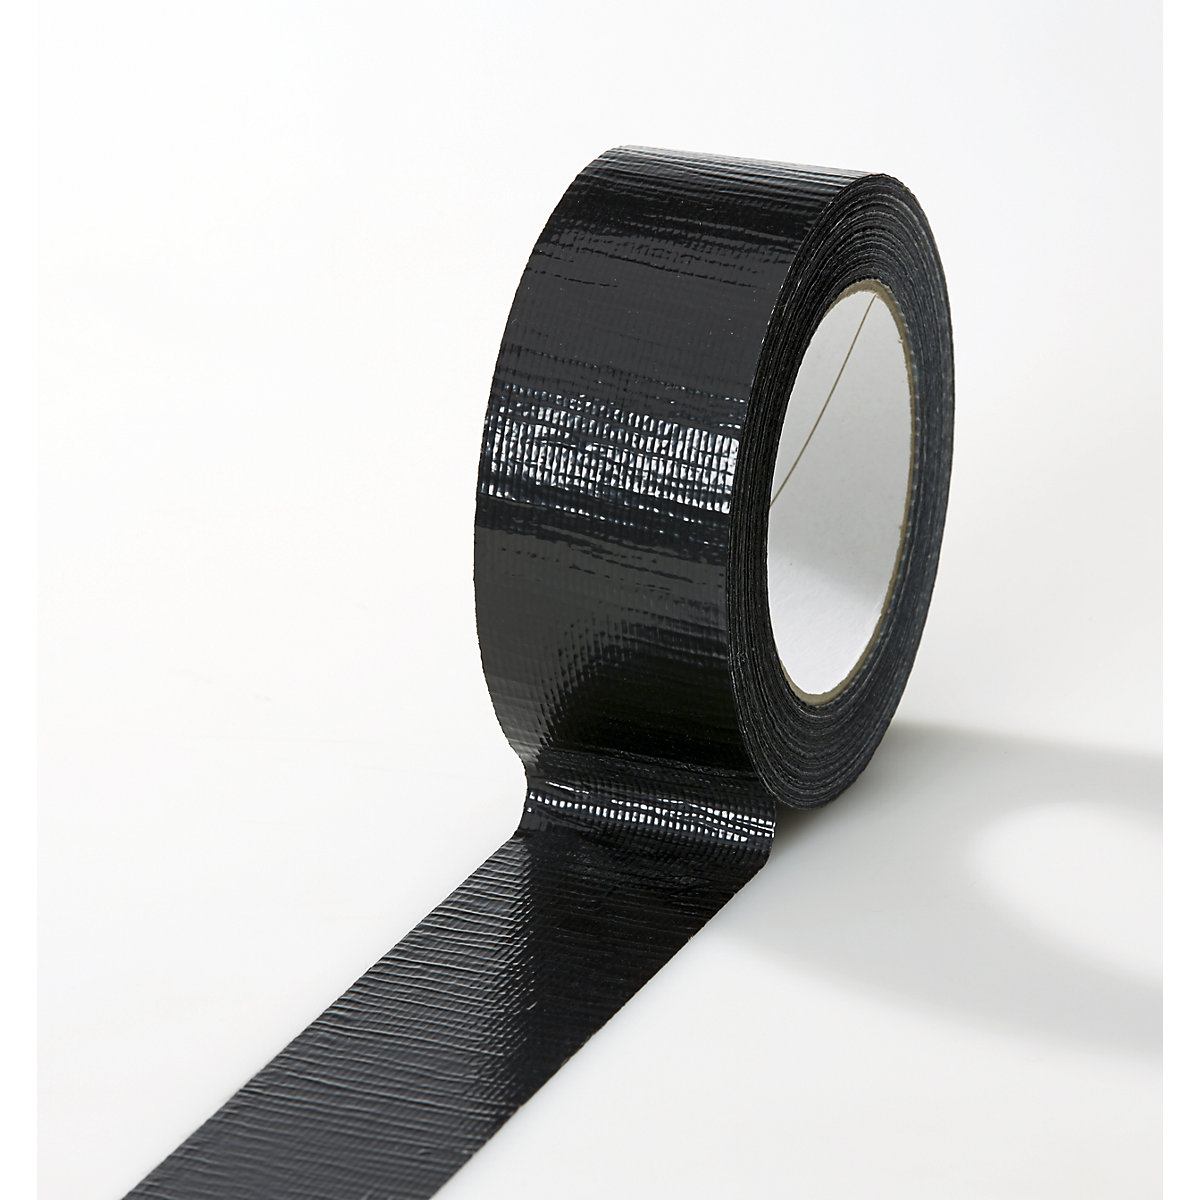 Tkaninová páska, v různých barvách, bal.j. 24 rolí, černá, šířka pásky 38 mm-15